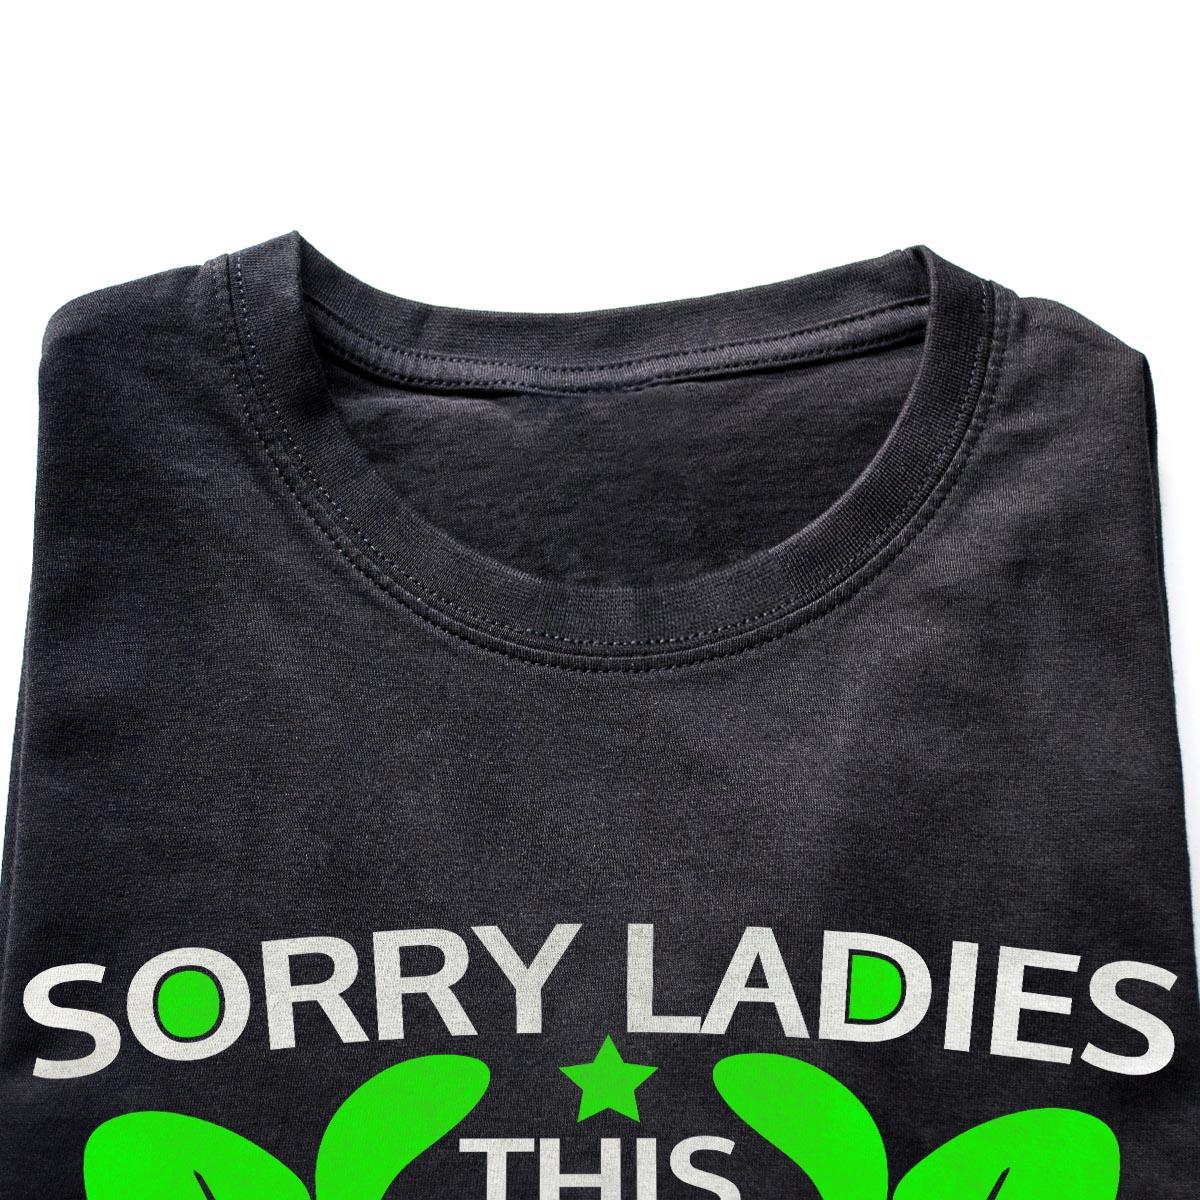 Tricouri petrecerea burlacilor - Sorry ladies 8